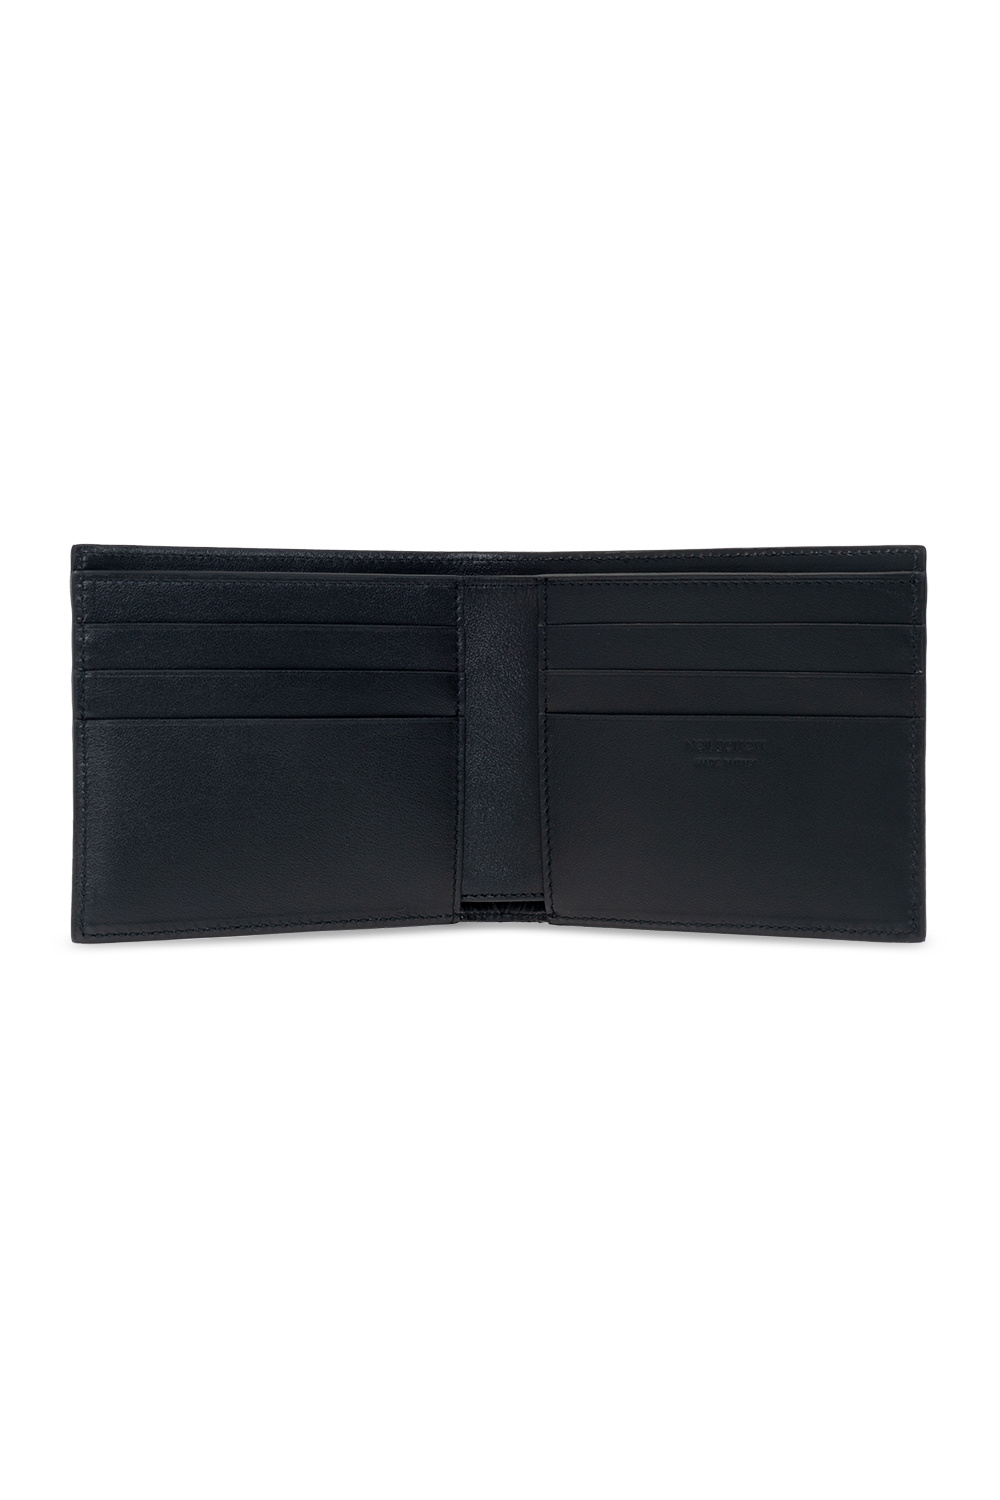 Neil Barrett Bi-fold wallet